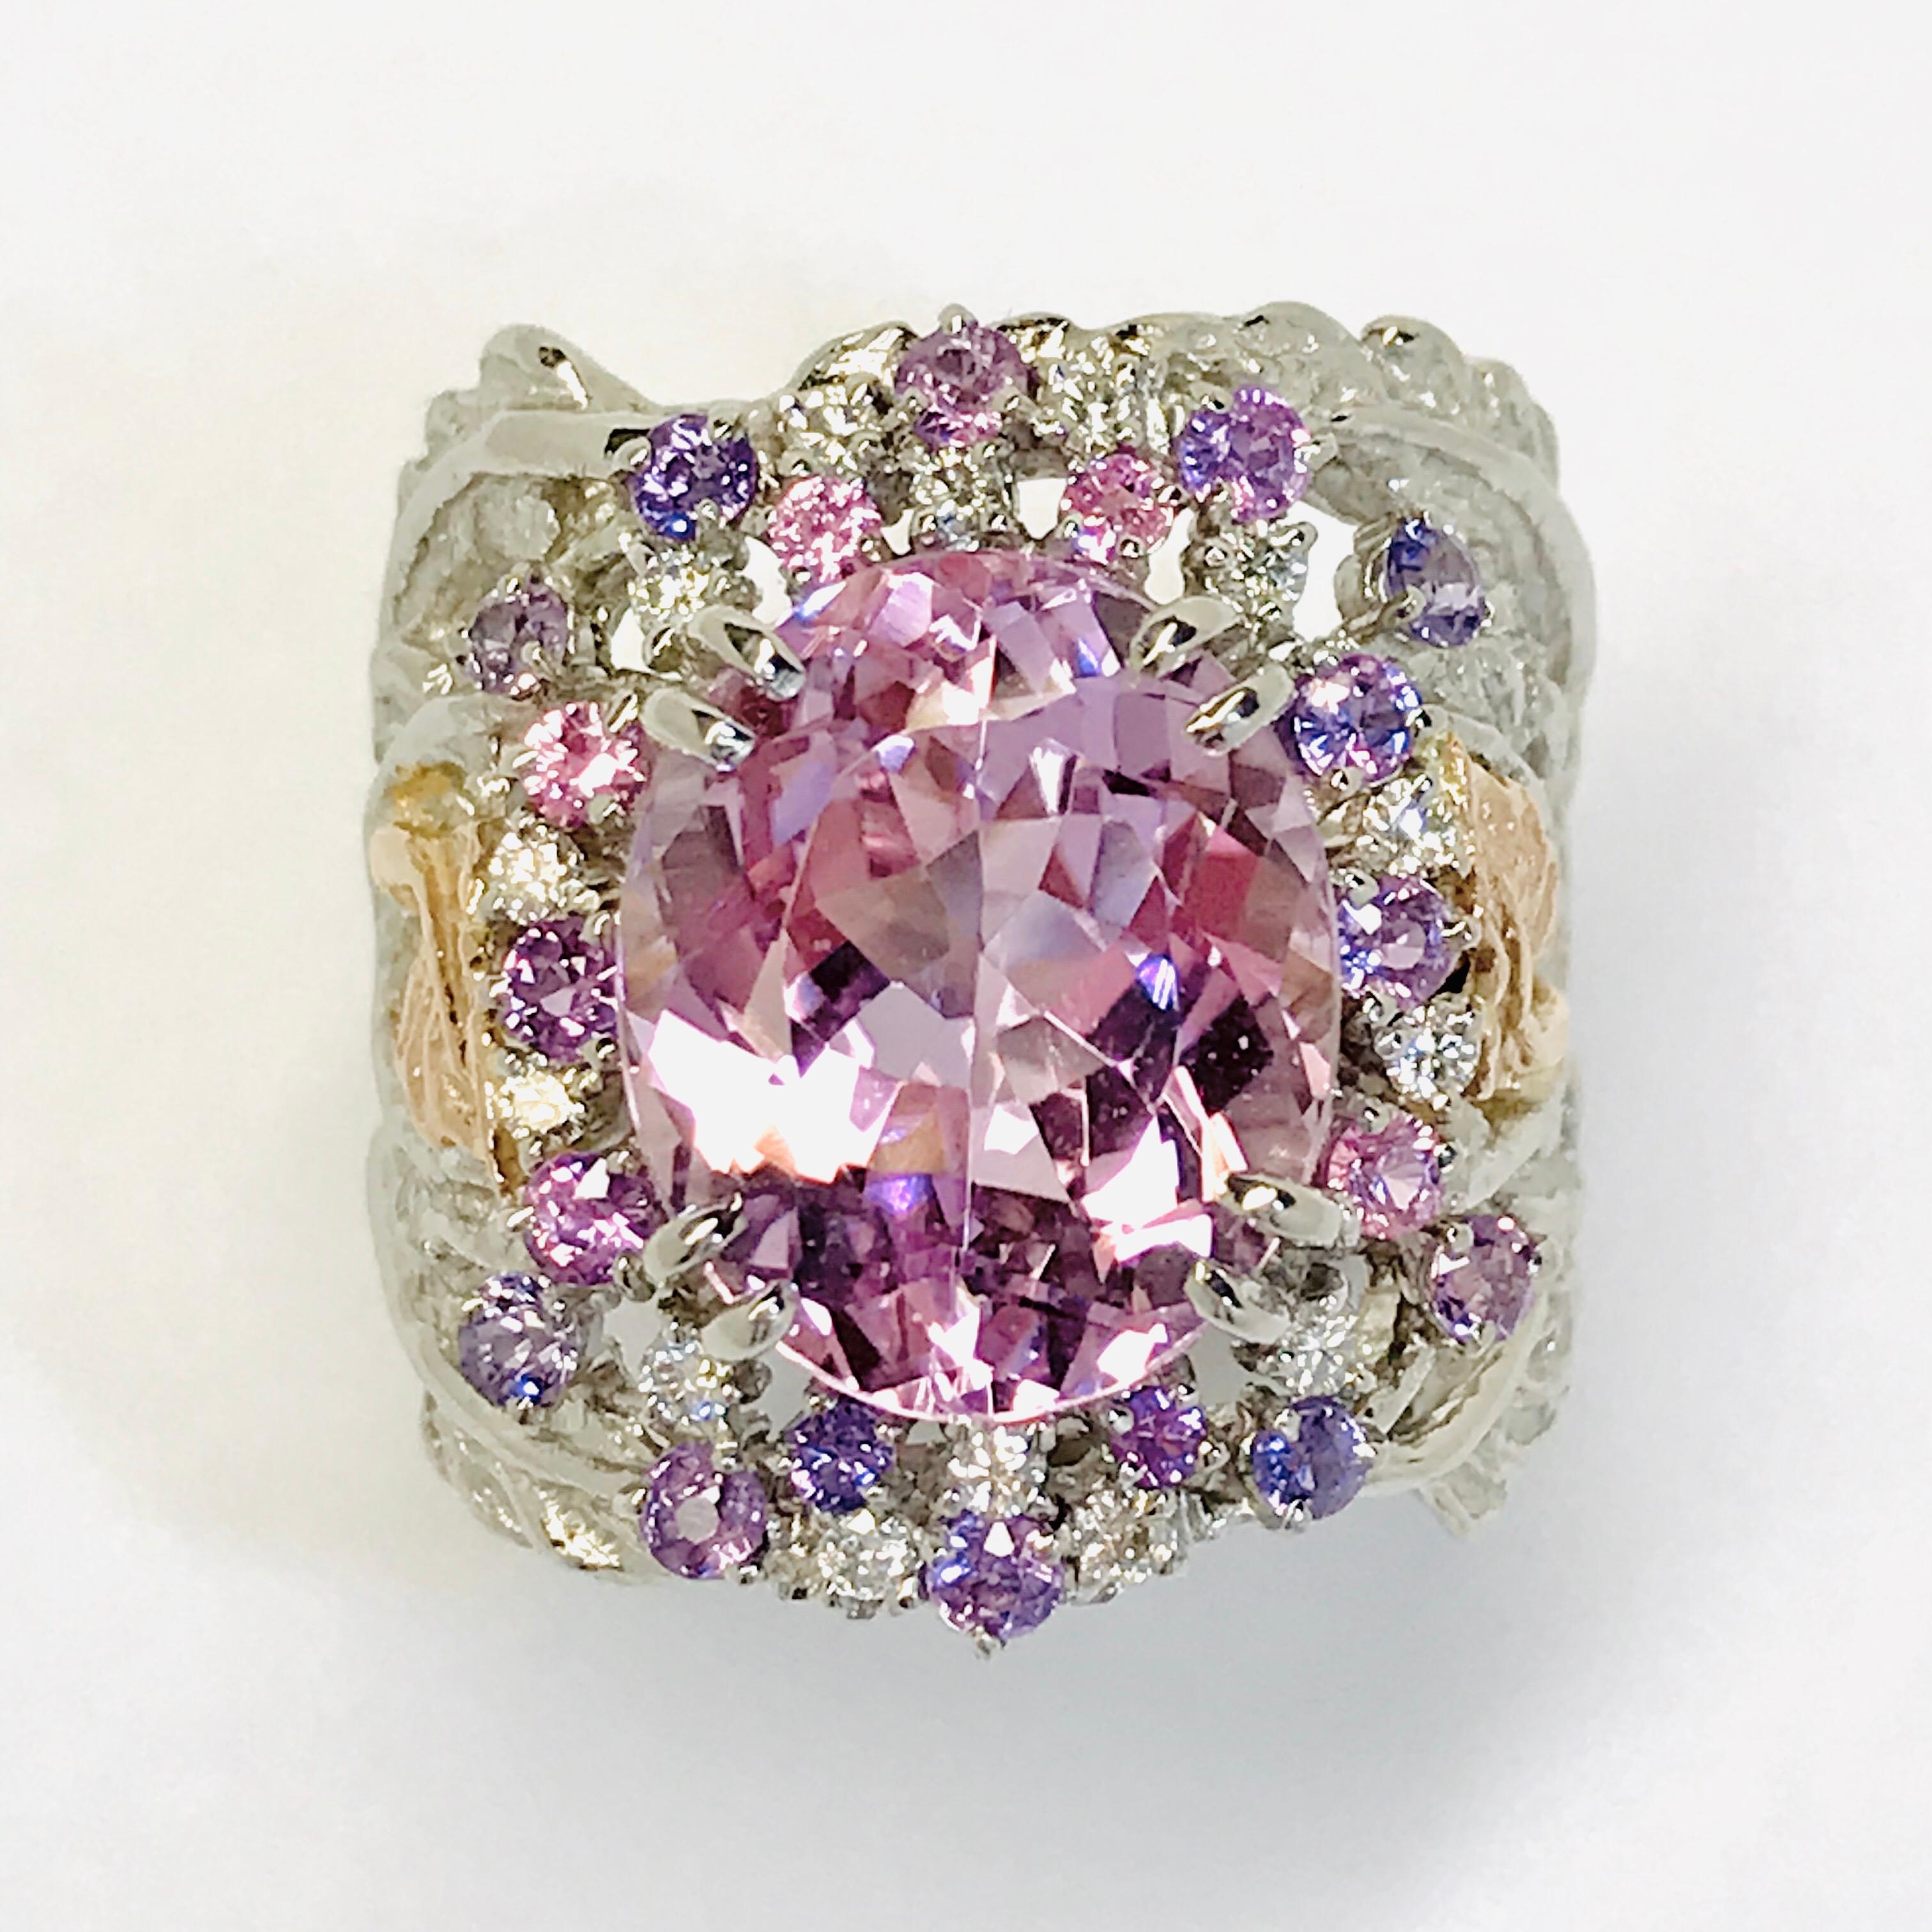 Artist Matsuzaki Platinum Gold 7.58ct Oval Kunzite Pink Violet Sapphire Diamond Ring For Sale